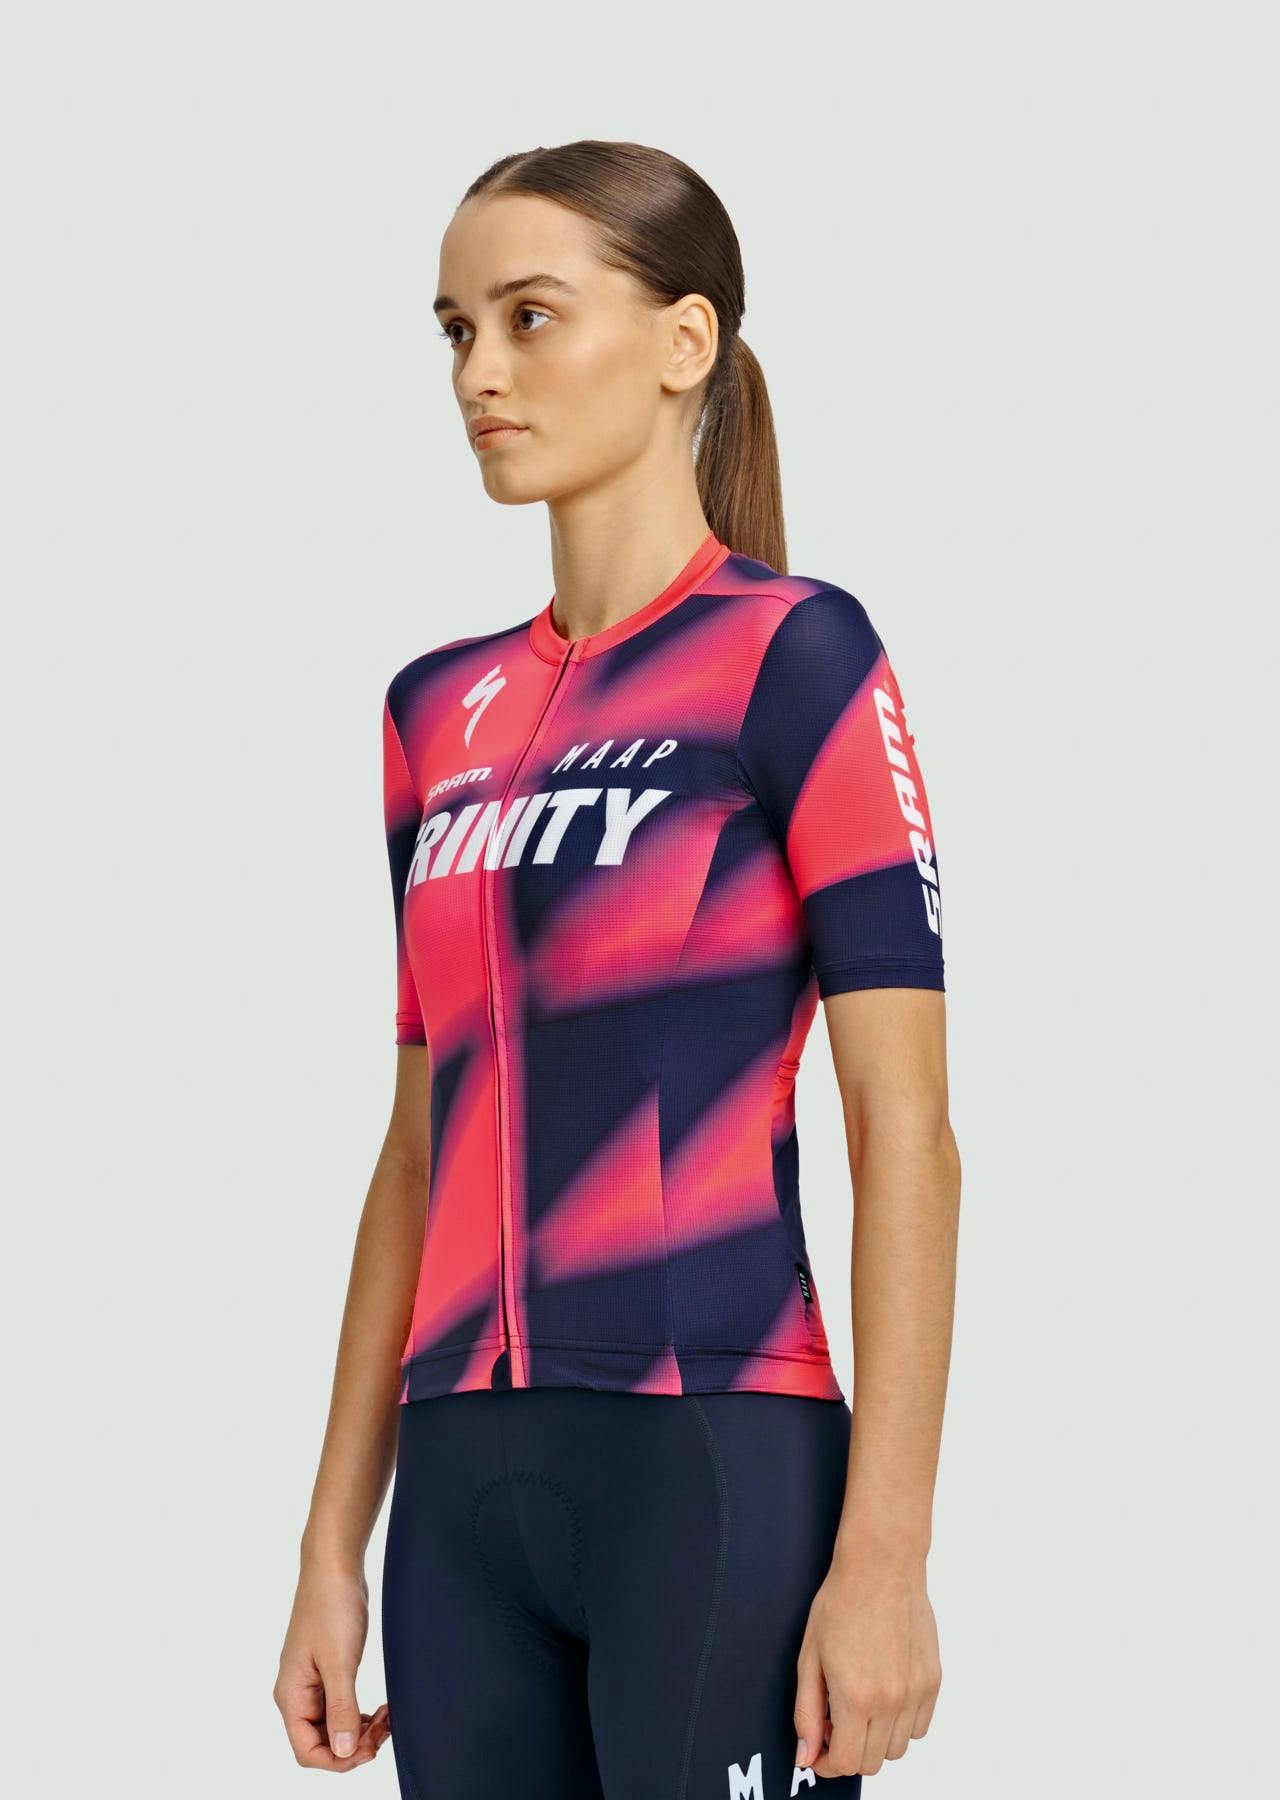 Women's Trinity Racing Supporter Team Jersey